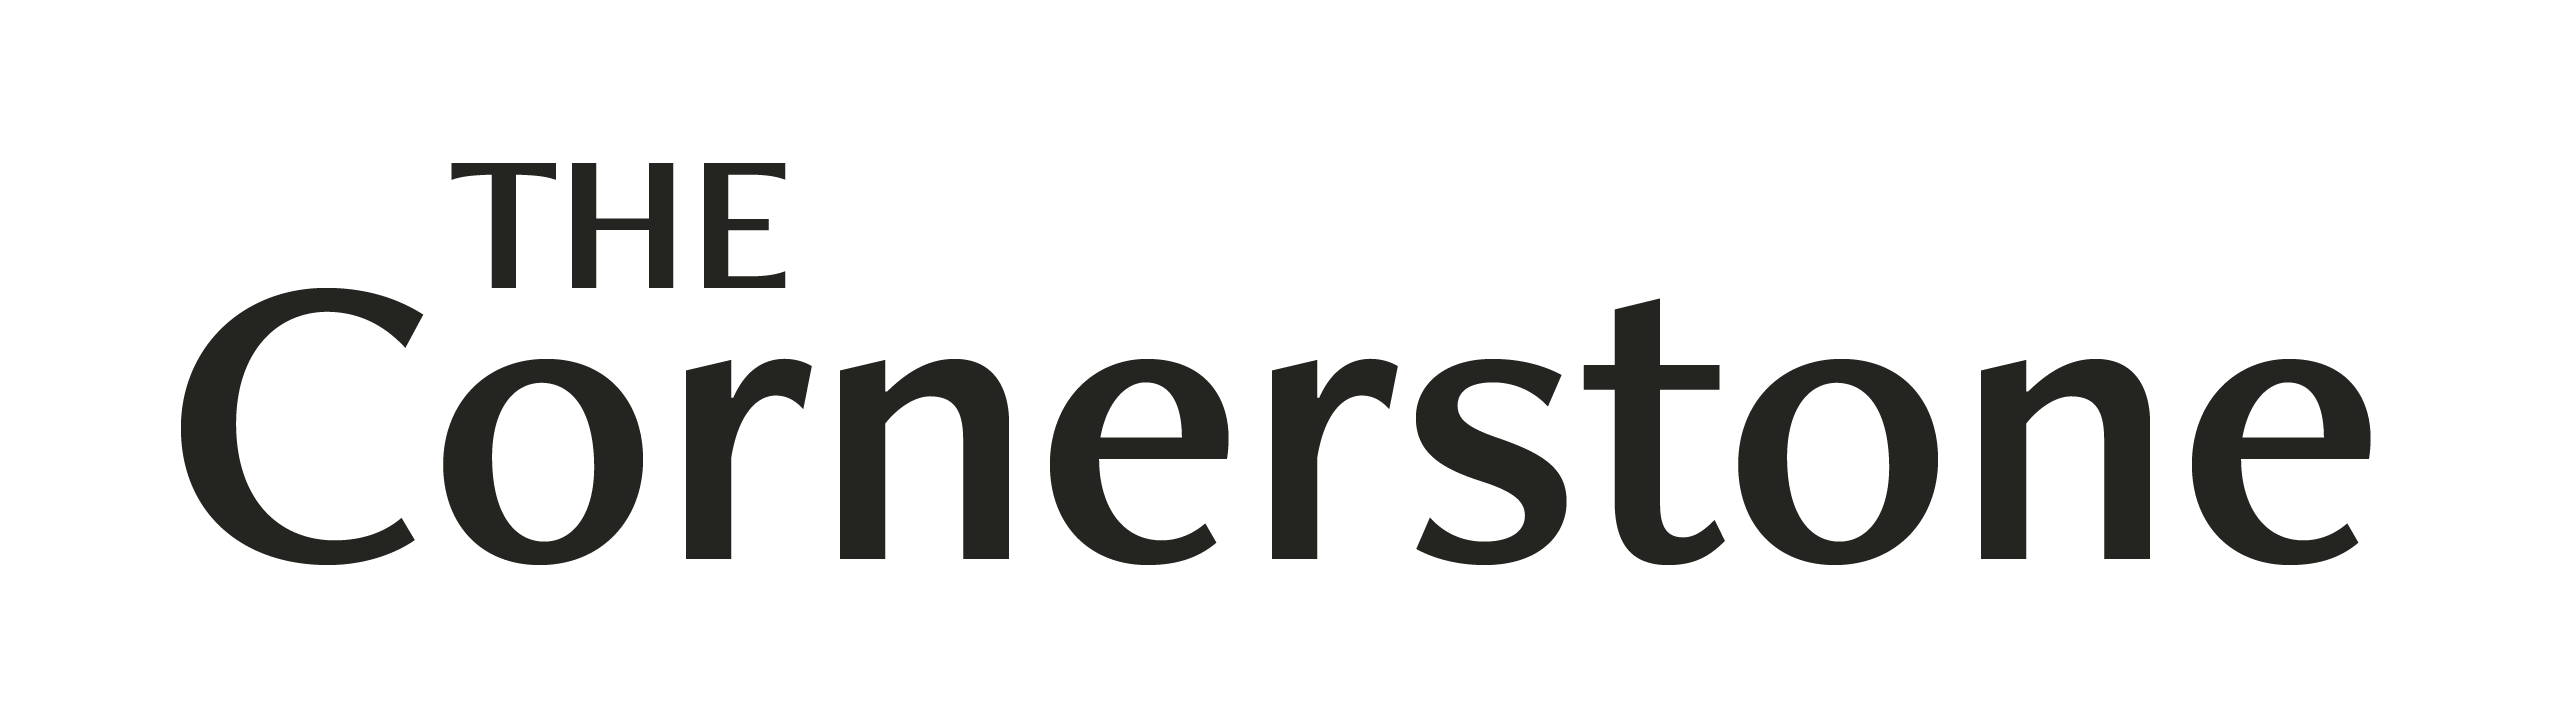 The cornerstoe building logo